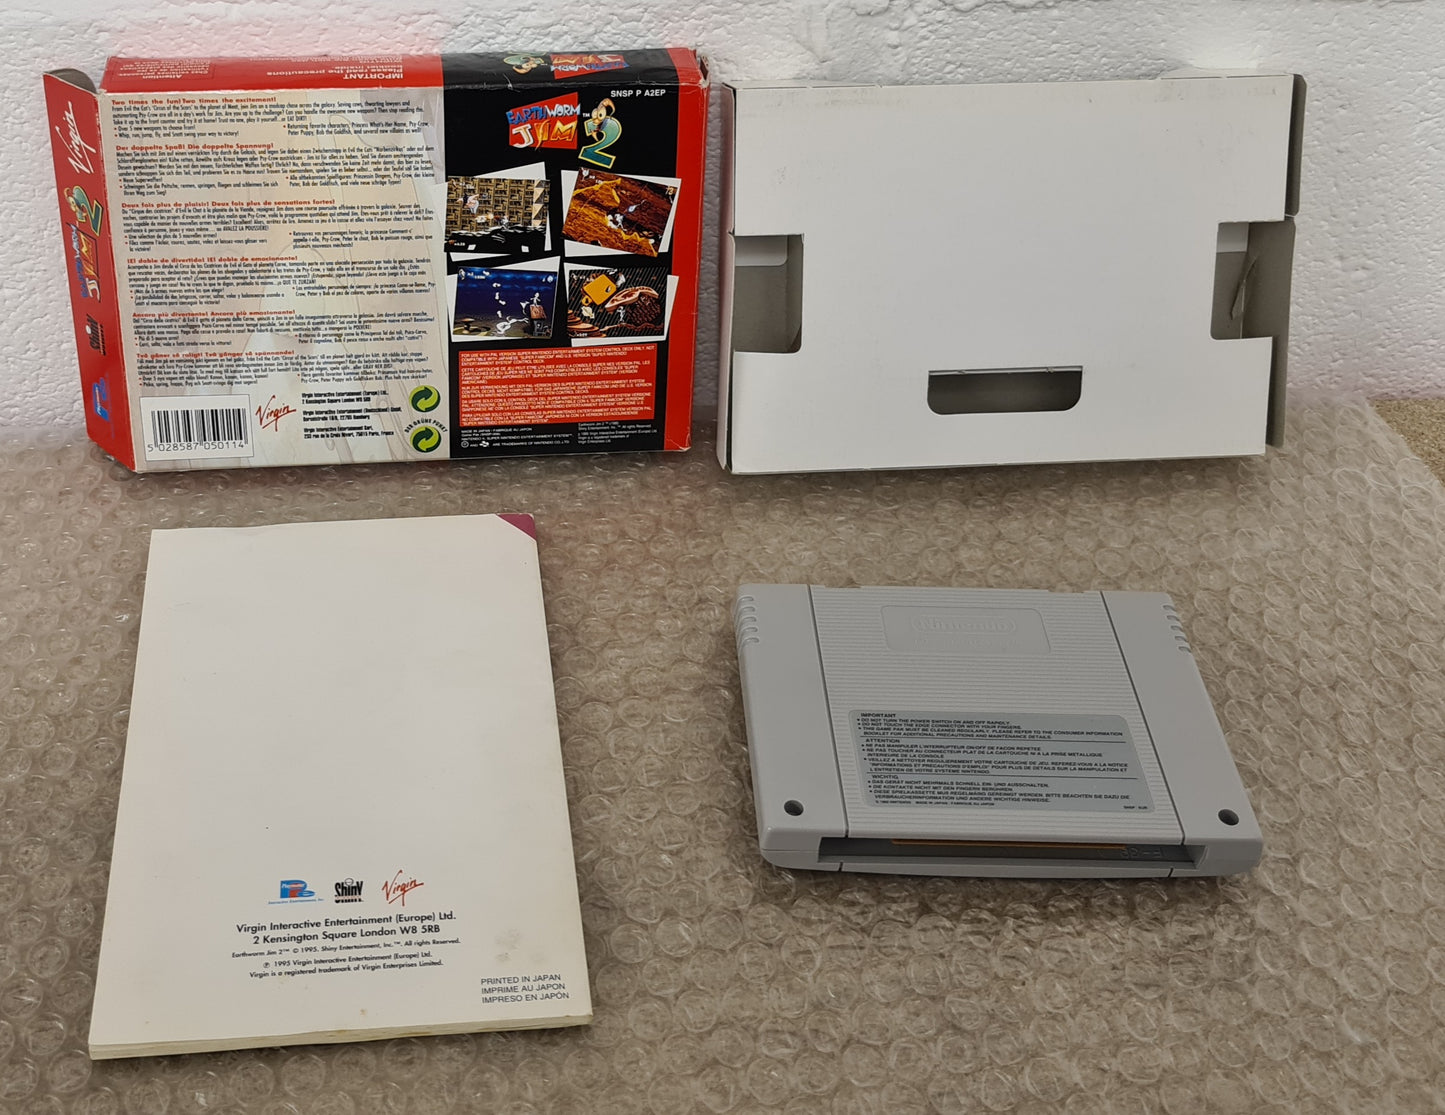 Earthworm Jim 2 Super Nintendo Entertainment System (SNES) game.